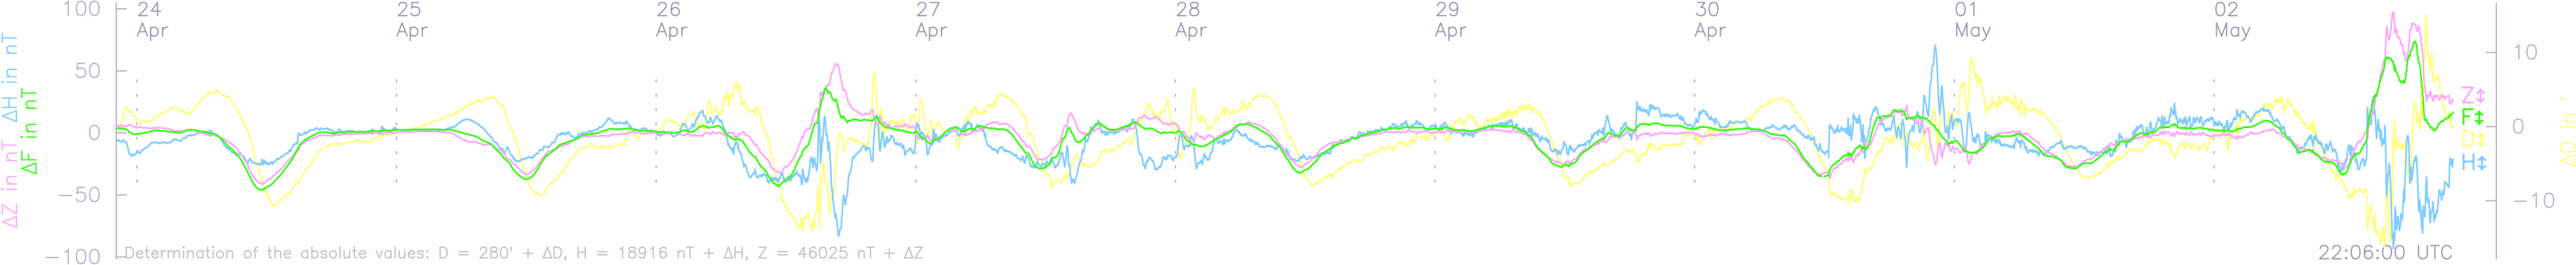 Image of the Current Variogram from Niemegk Geomagnetic Observatory